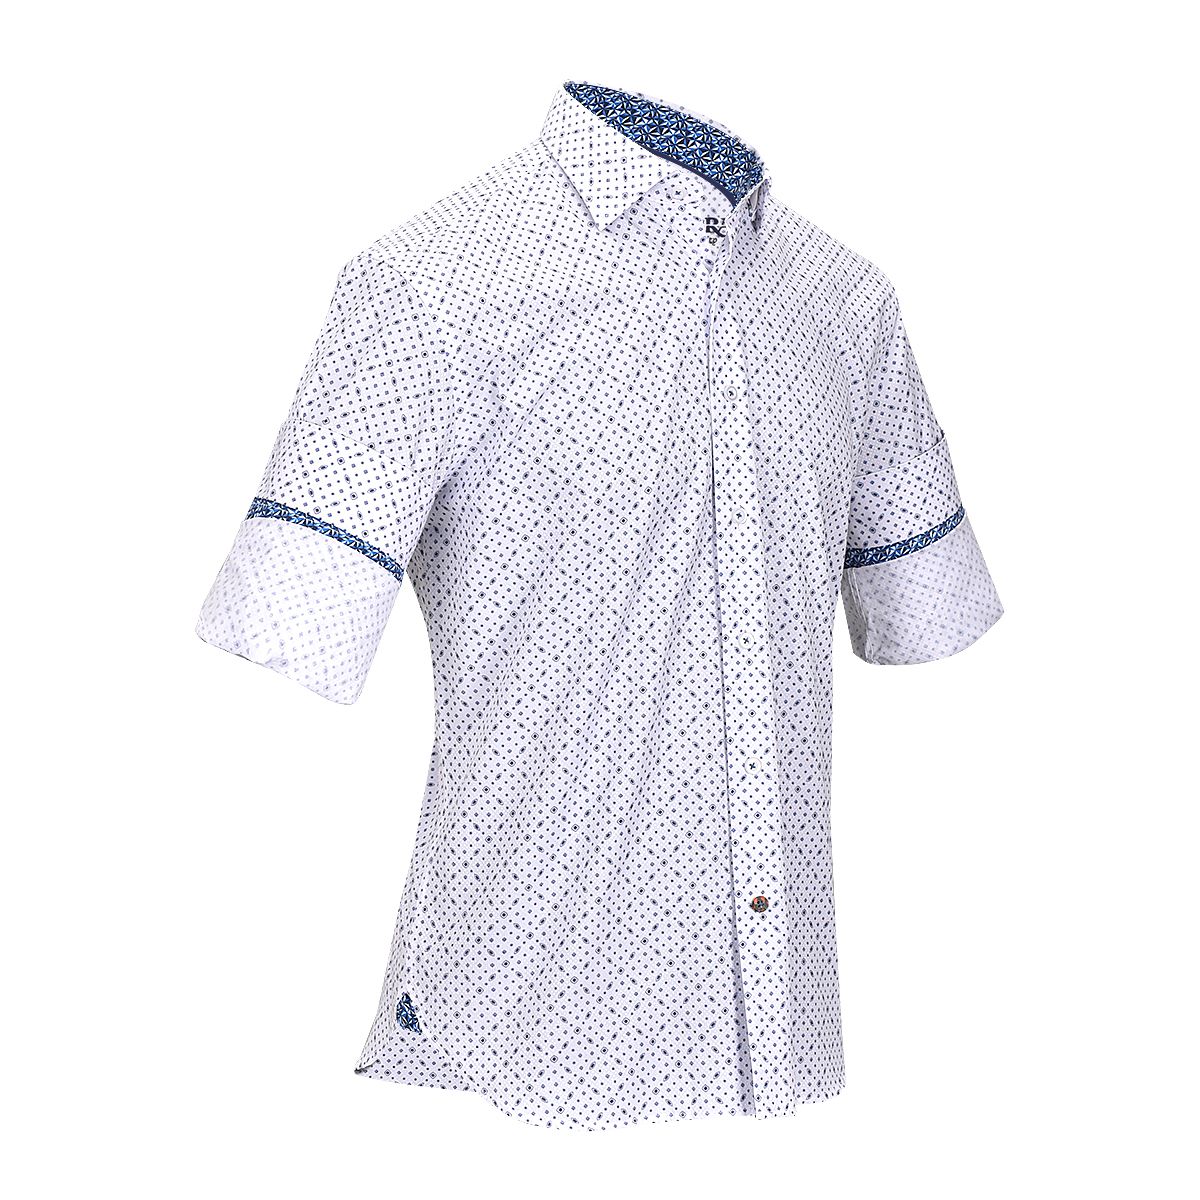 CM04601 - Cuadra white casual fashion long sleeve cotton shirt-Kuet.us